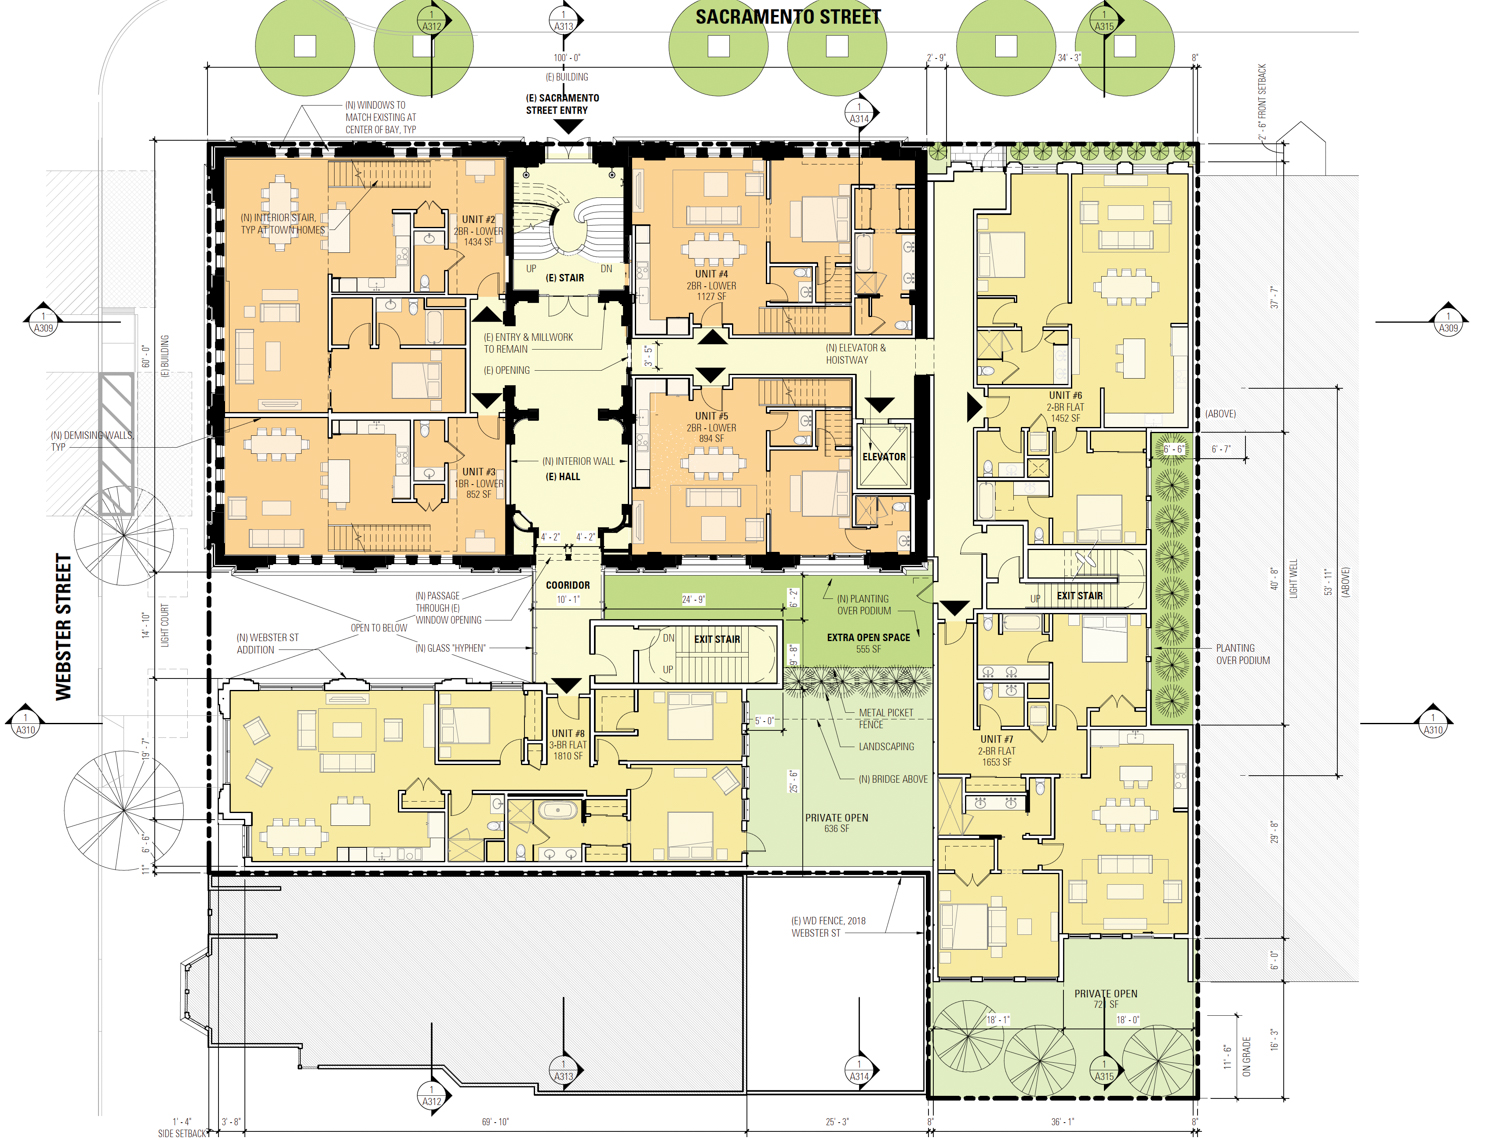 2395 Sacramento Street second-level floor plan, illustration by BAR Architects